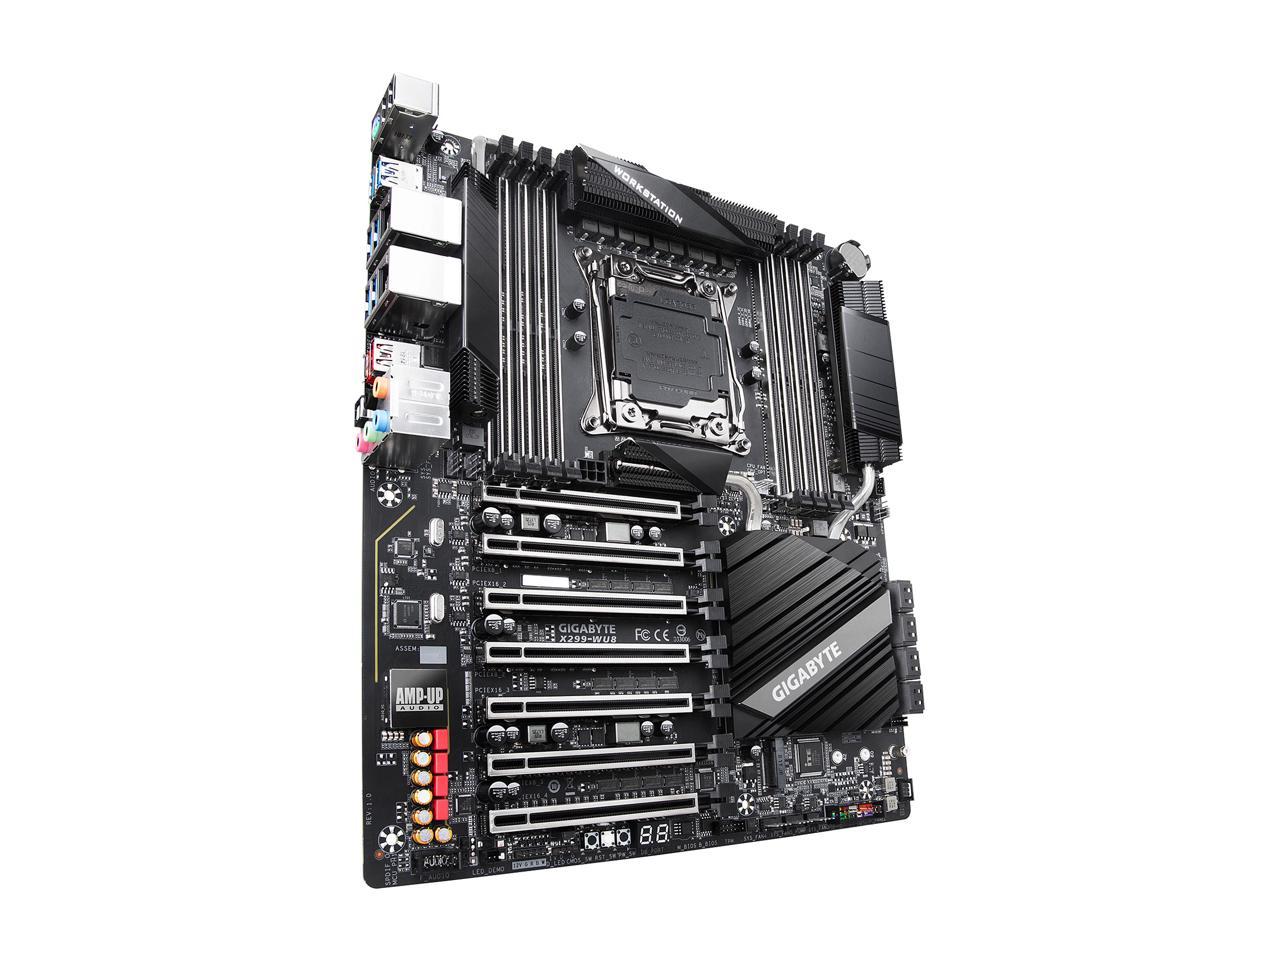 GIGABYTE X299-WU8 LGA 2066 Intel X299 Motherboard with 7 PCIe x16 Slots and Dual Intel Server LAN